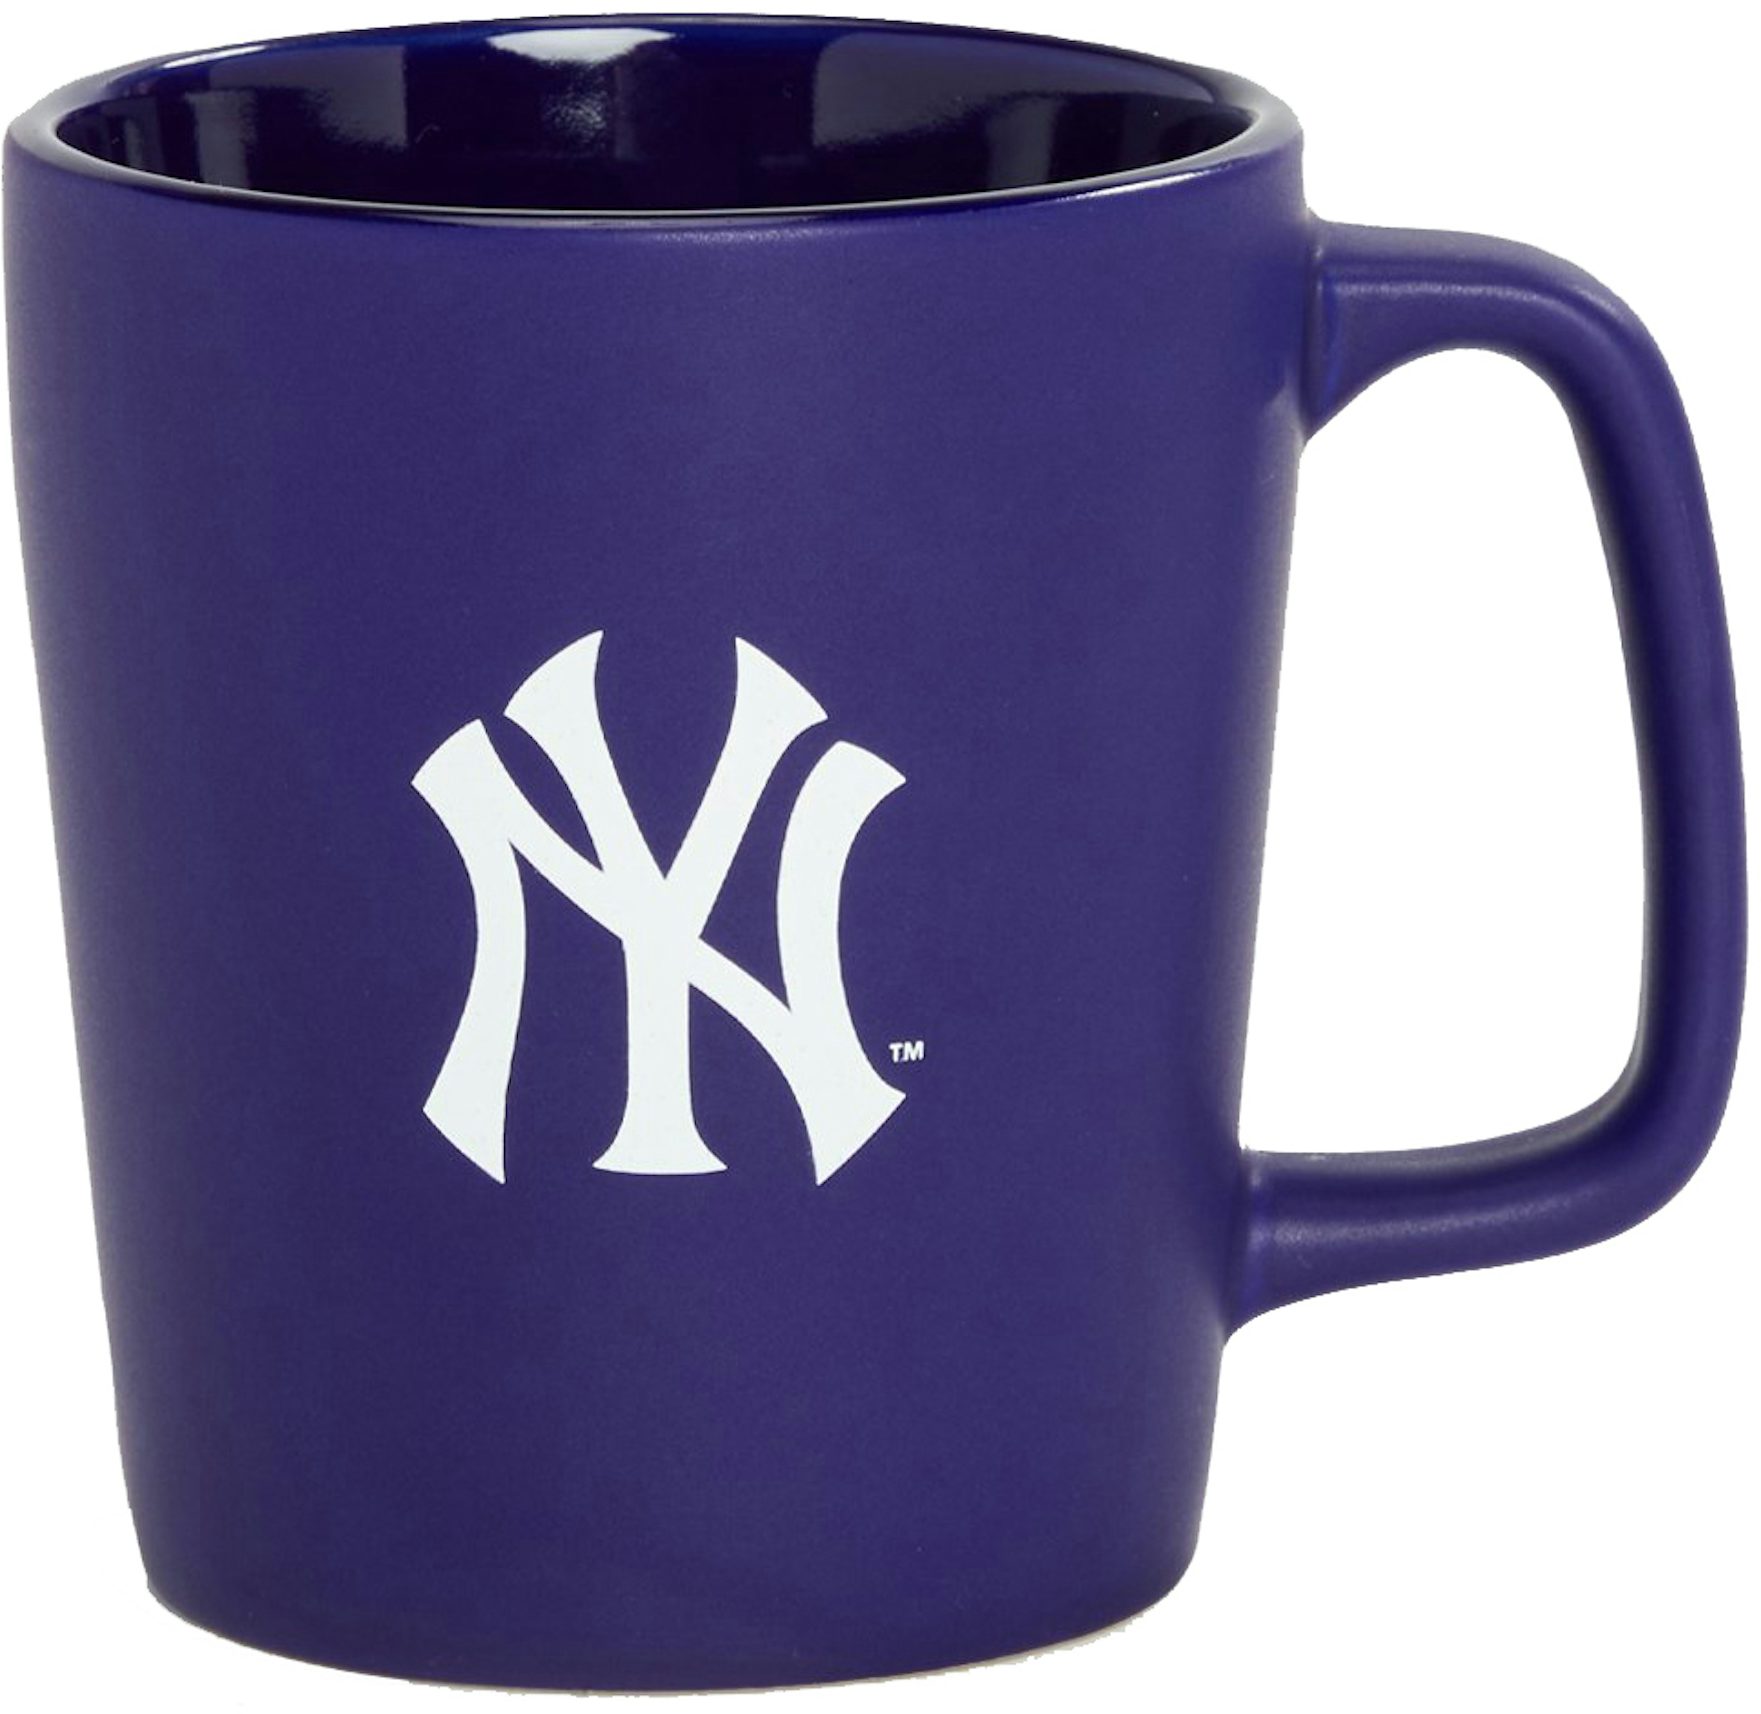 https://images.stockx.com/images/Kith-MLB-for-New-York-Yankees-Lockup-Mug-Nocturnal.jpg?fit=fill&bg=FFFFFF&w=1200&h=857&fm=jpg&auto=compress&dpr=2&trim=color&updated_at=1636765829&q=60